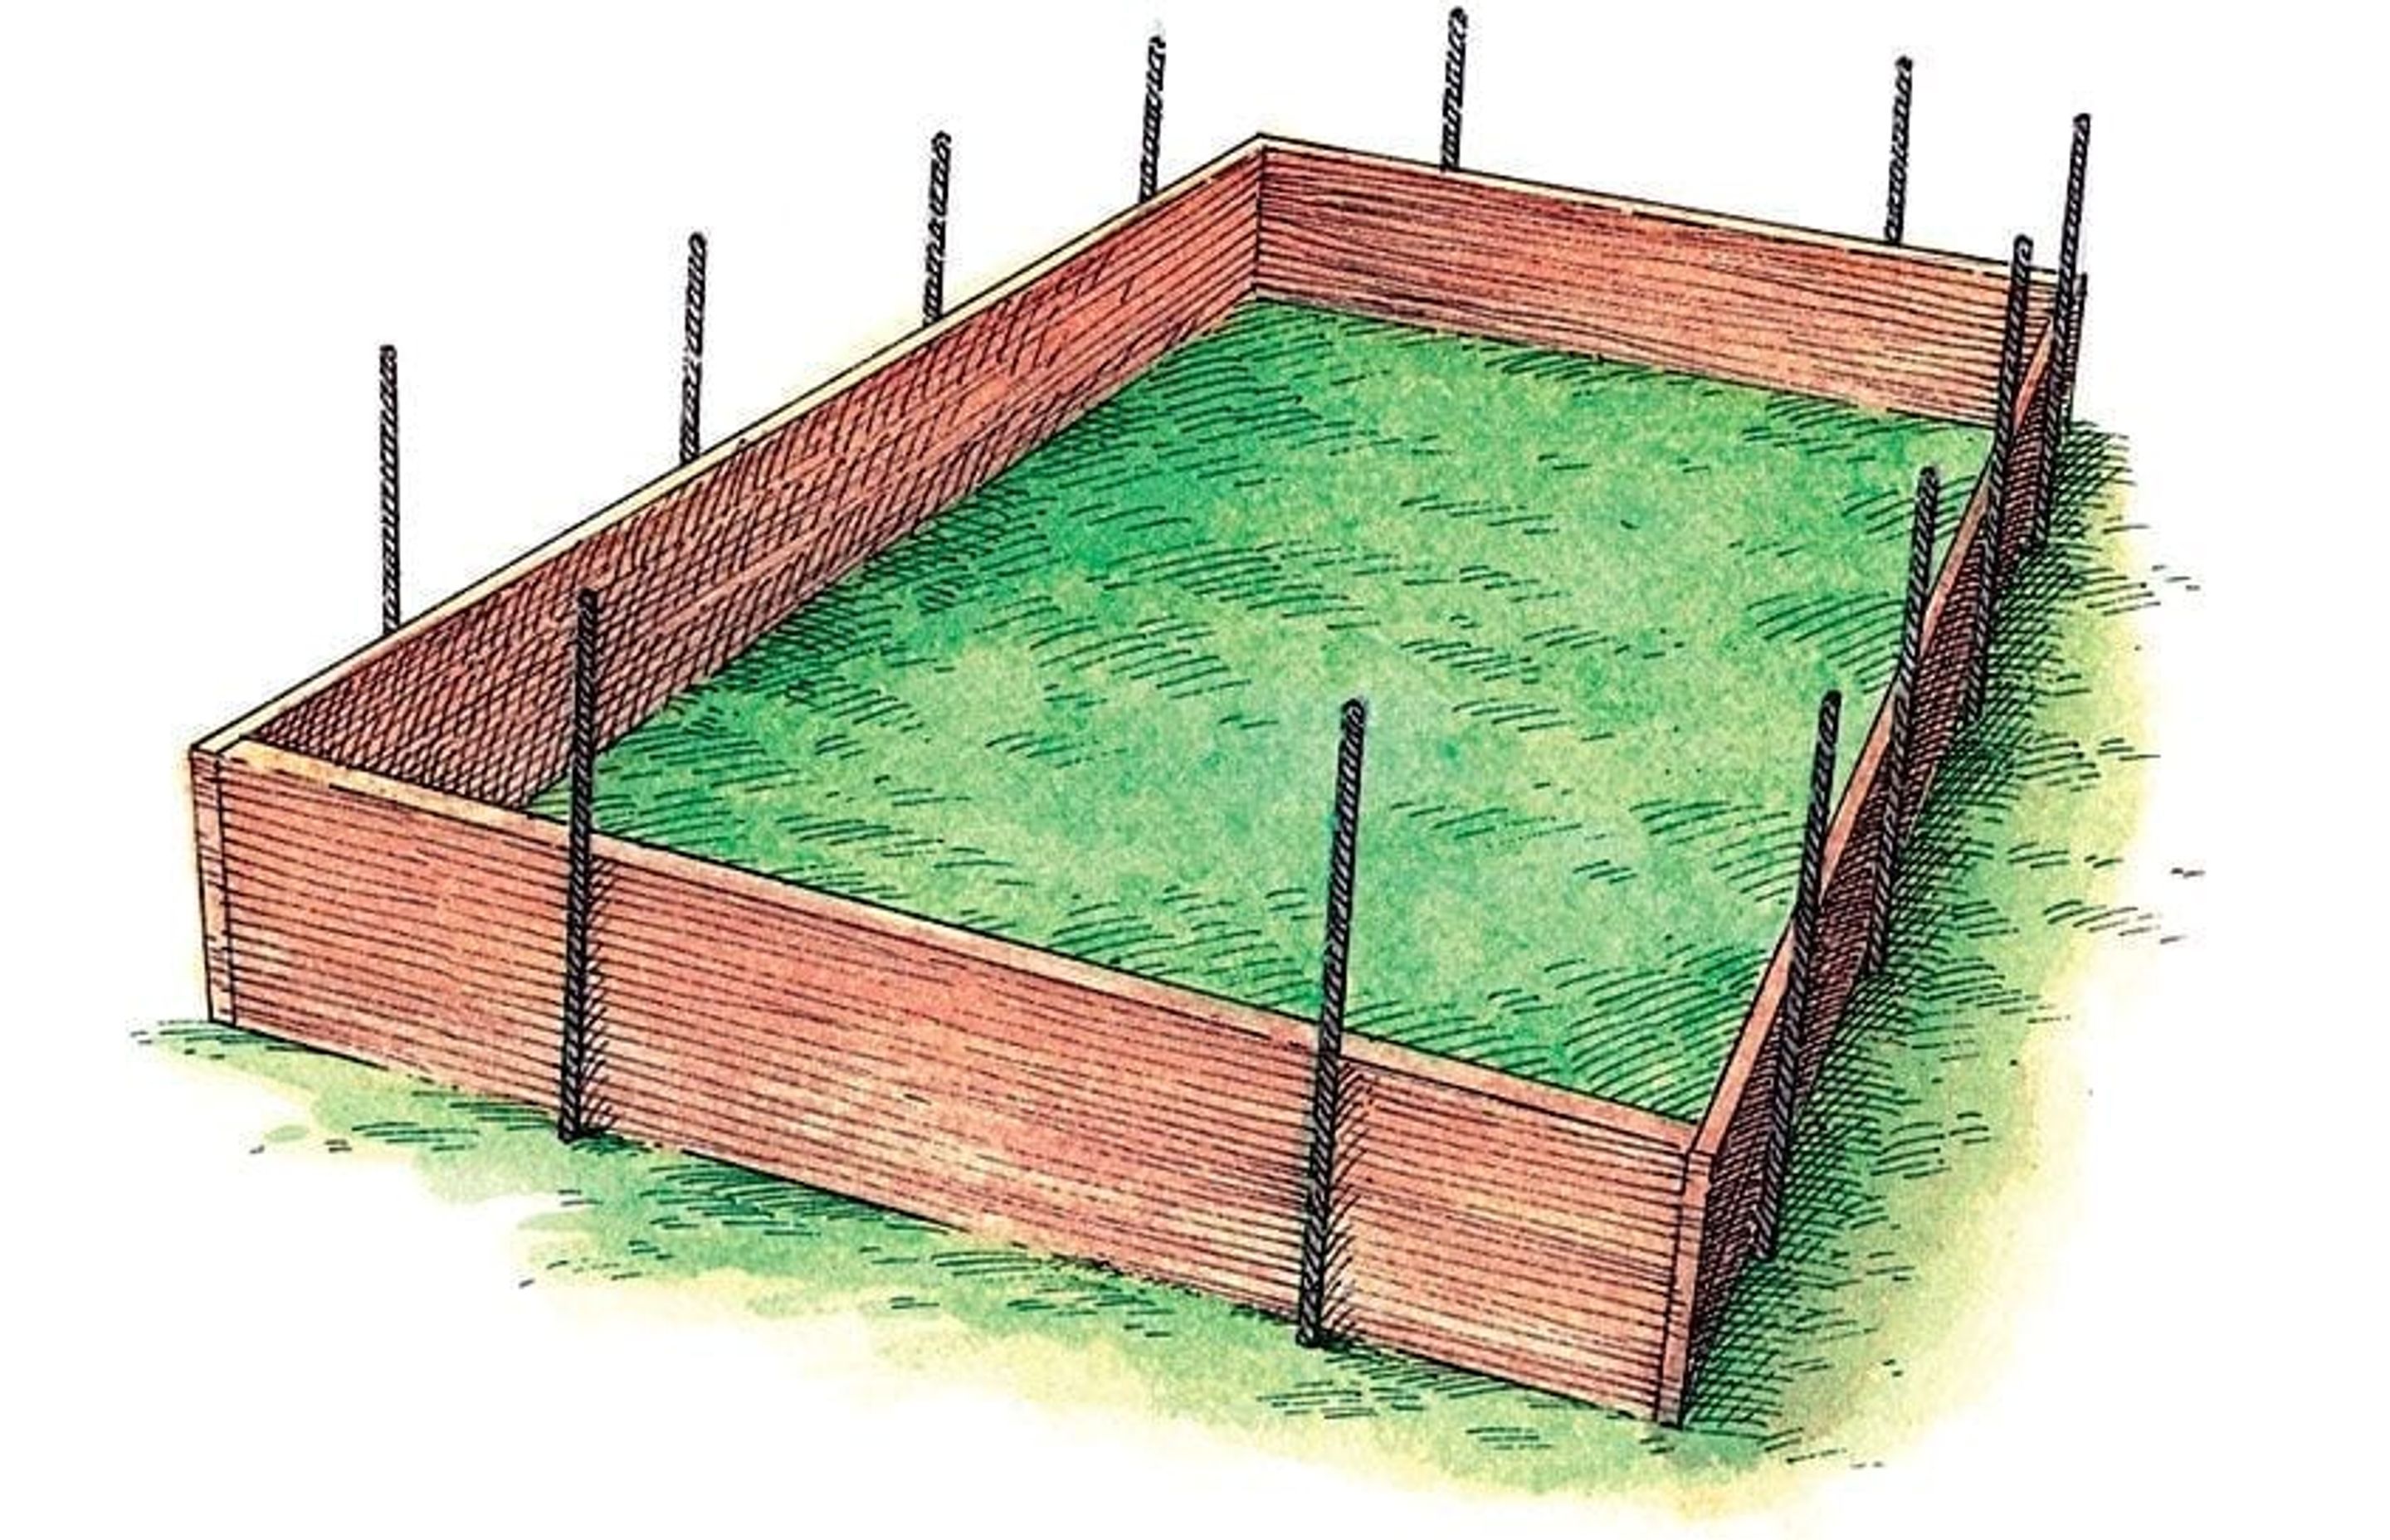 Weekend Series – Build a Simple Raised Garden Bed